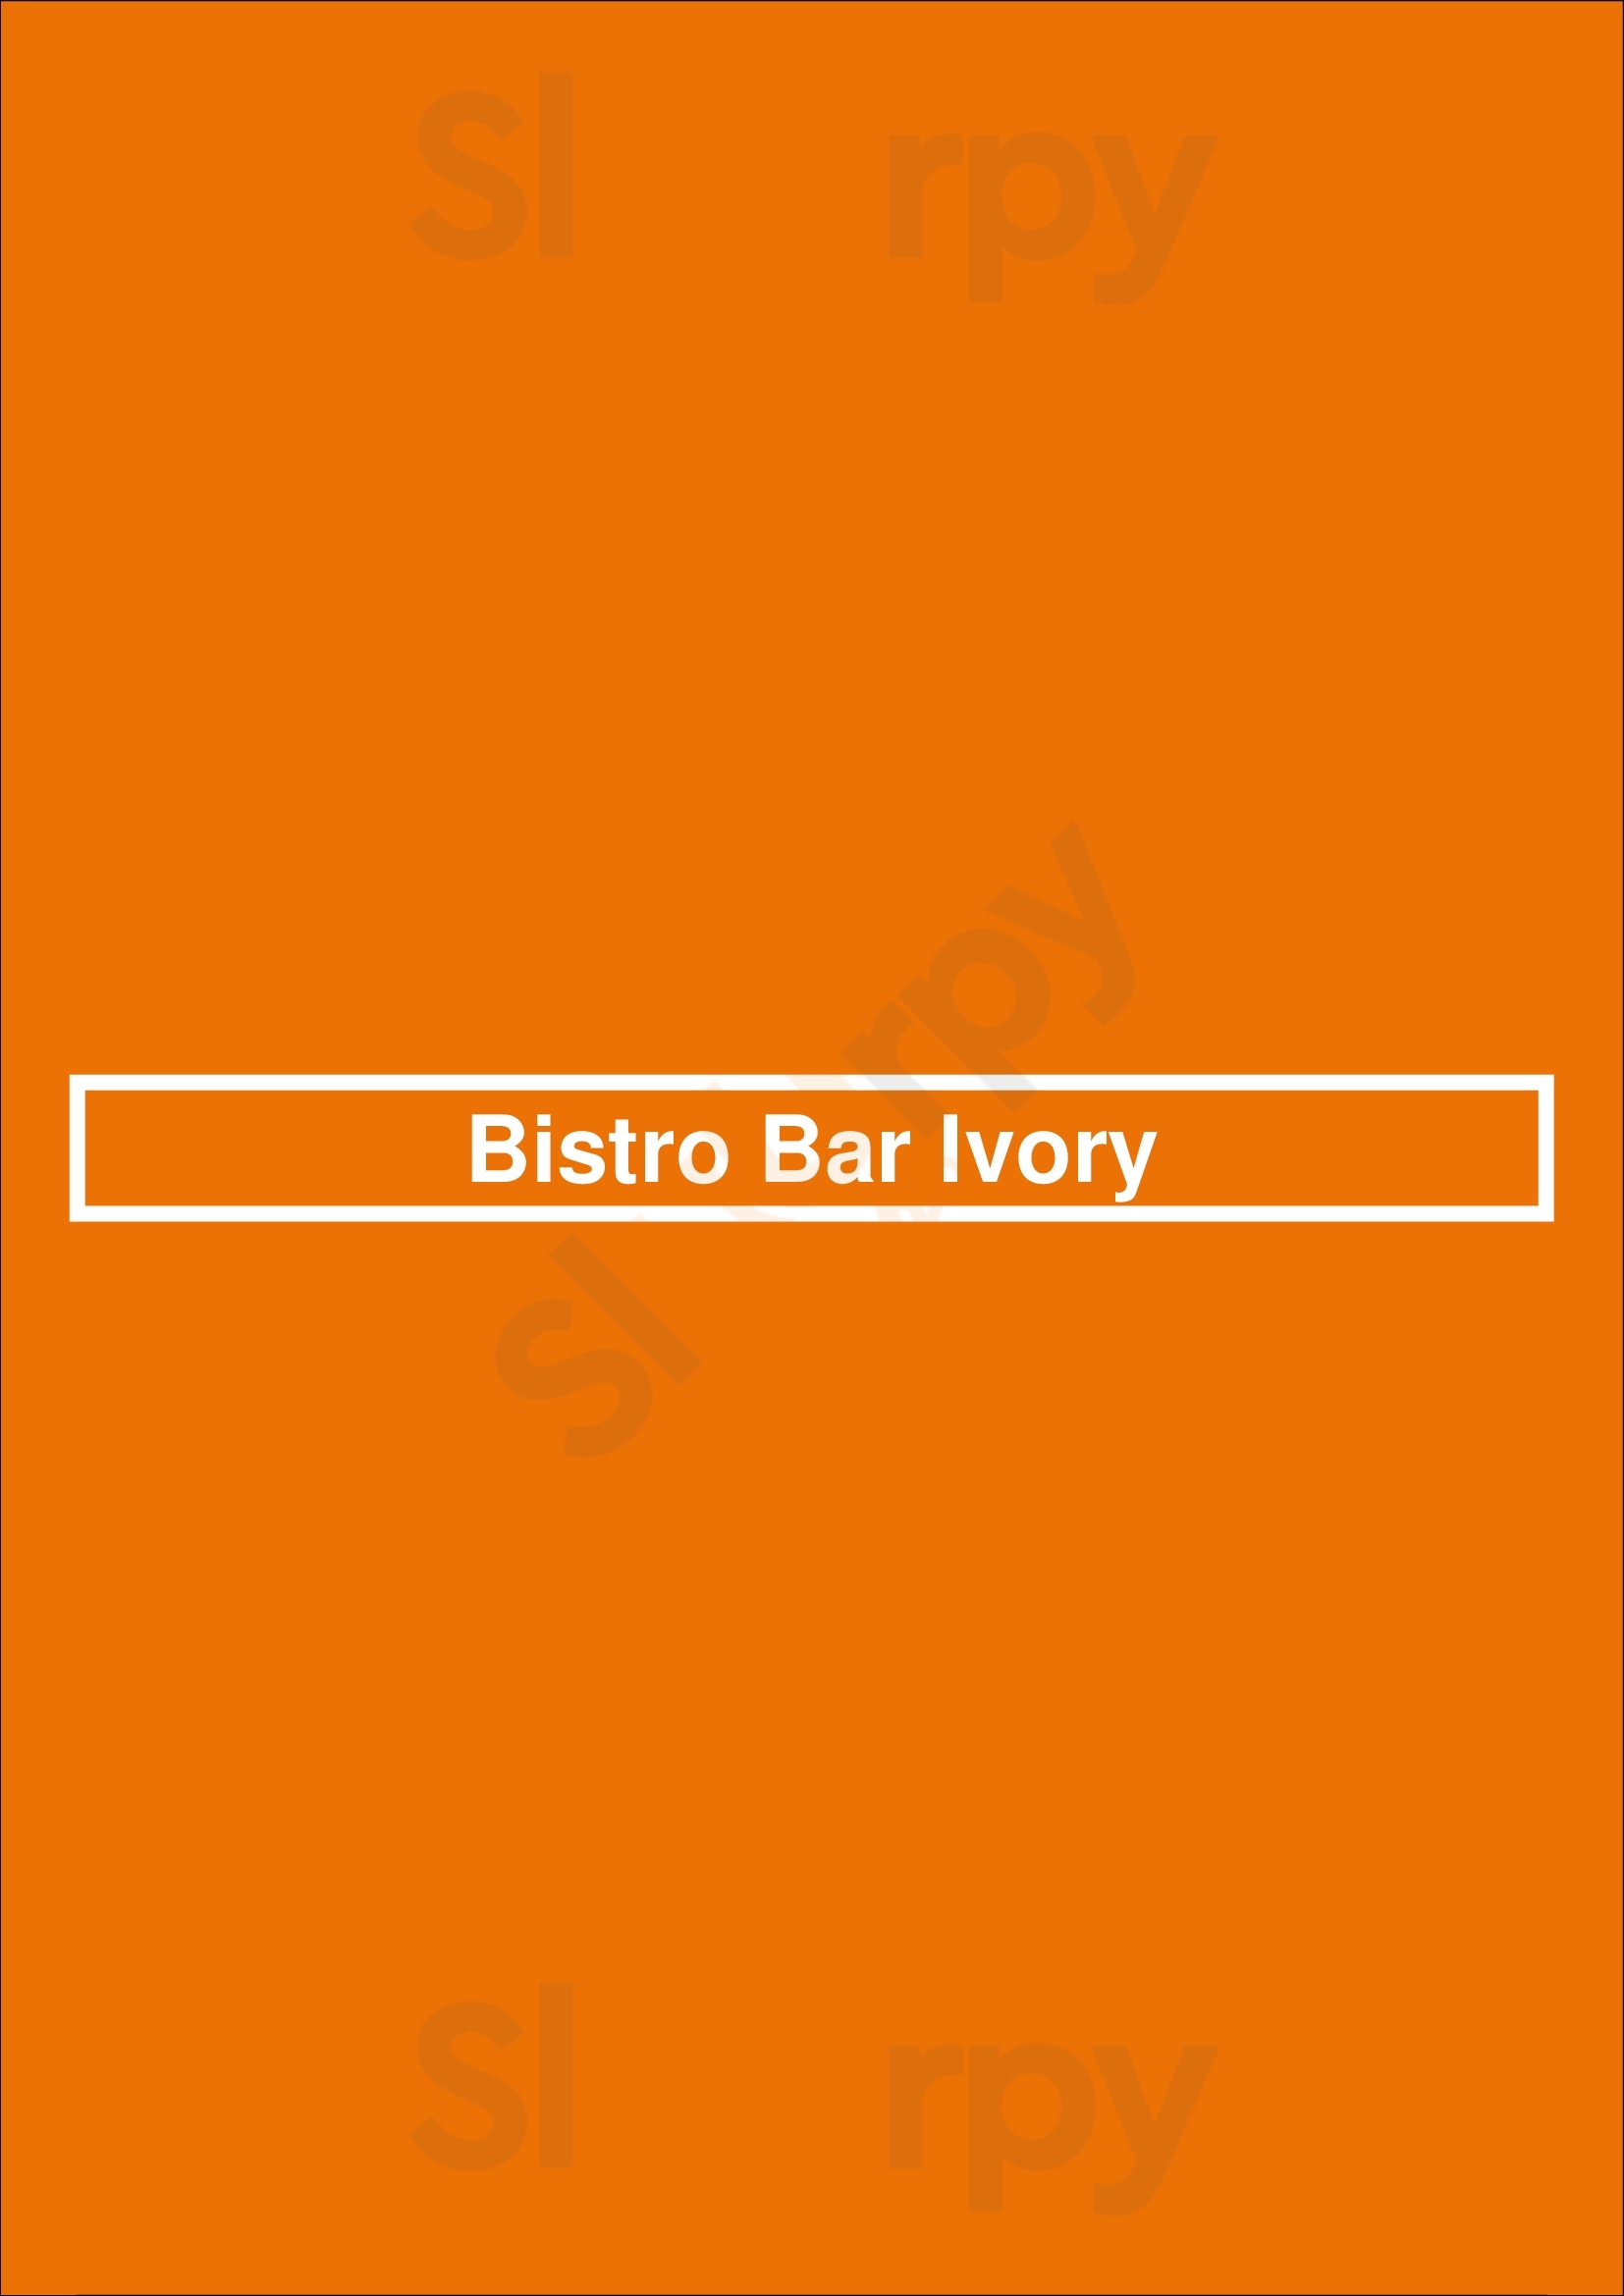 Bistro Bar Ivory Nijmegen Menu - 1